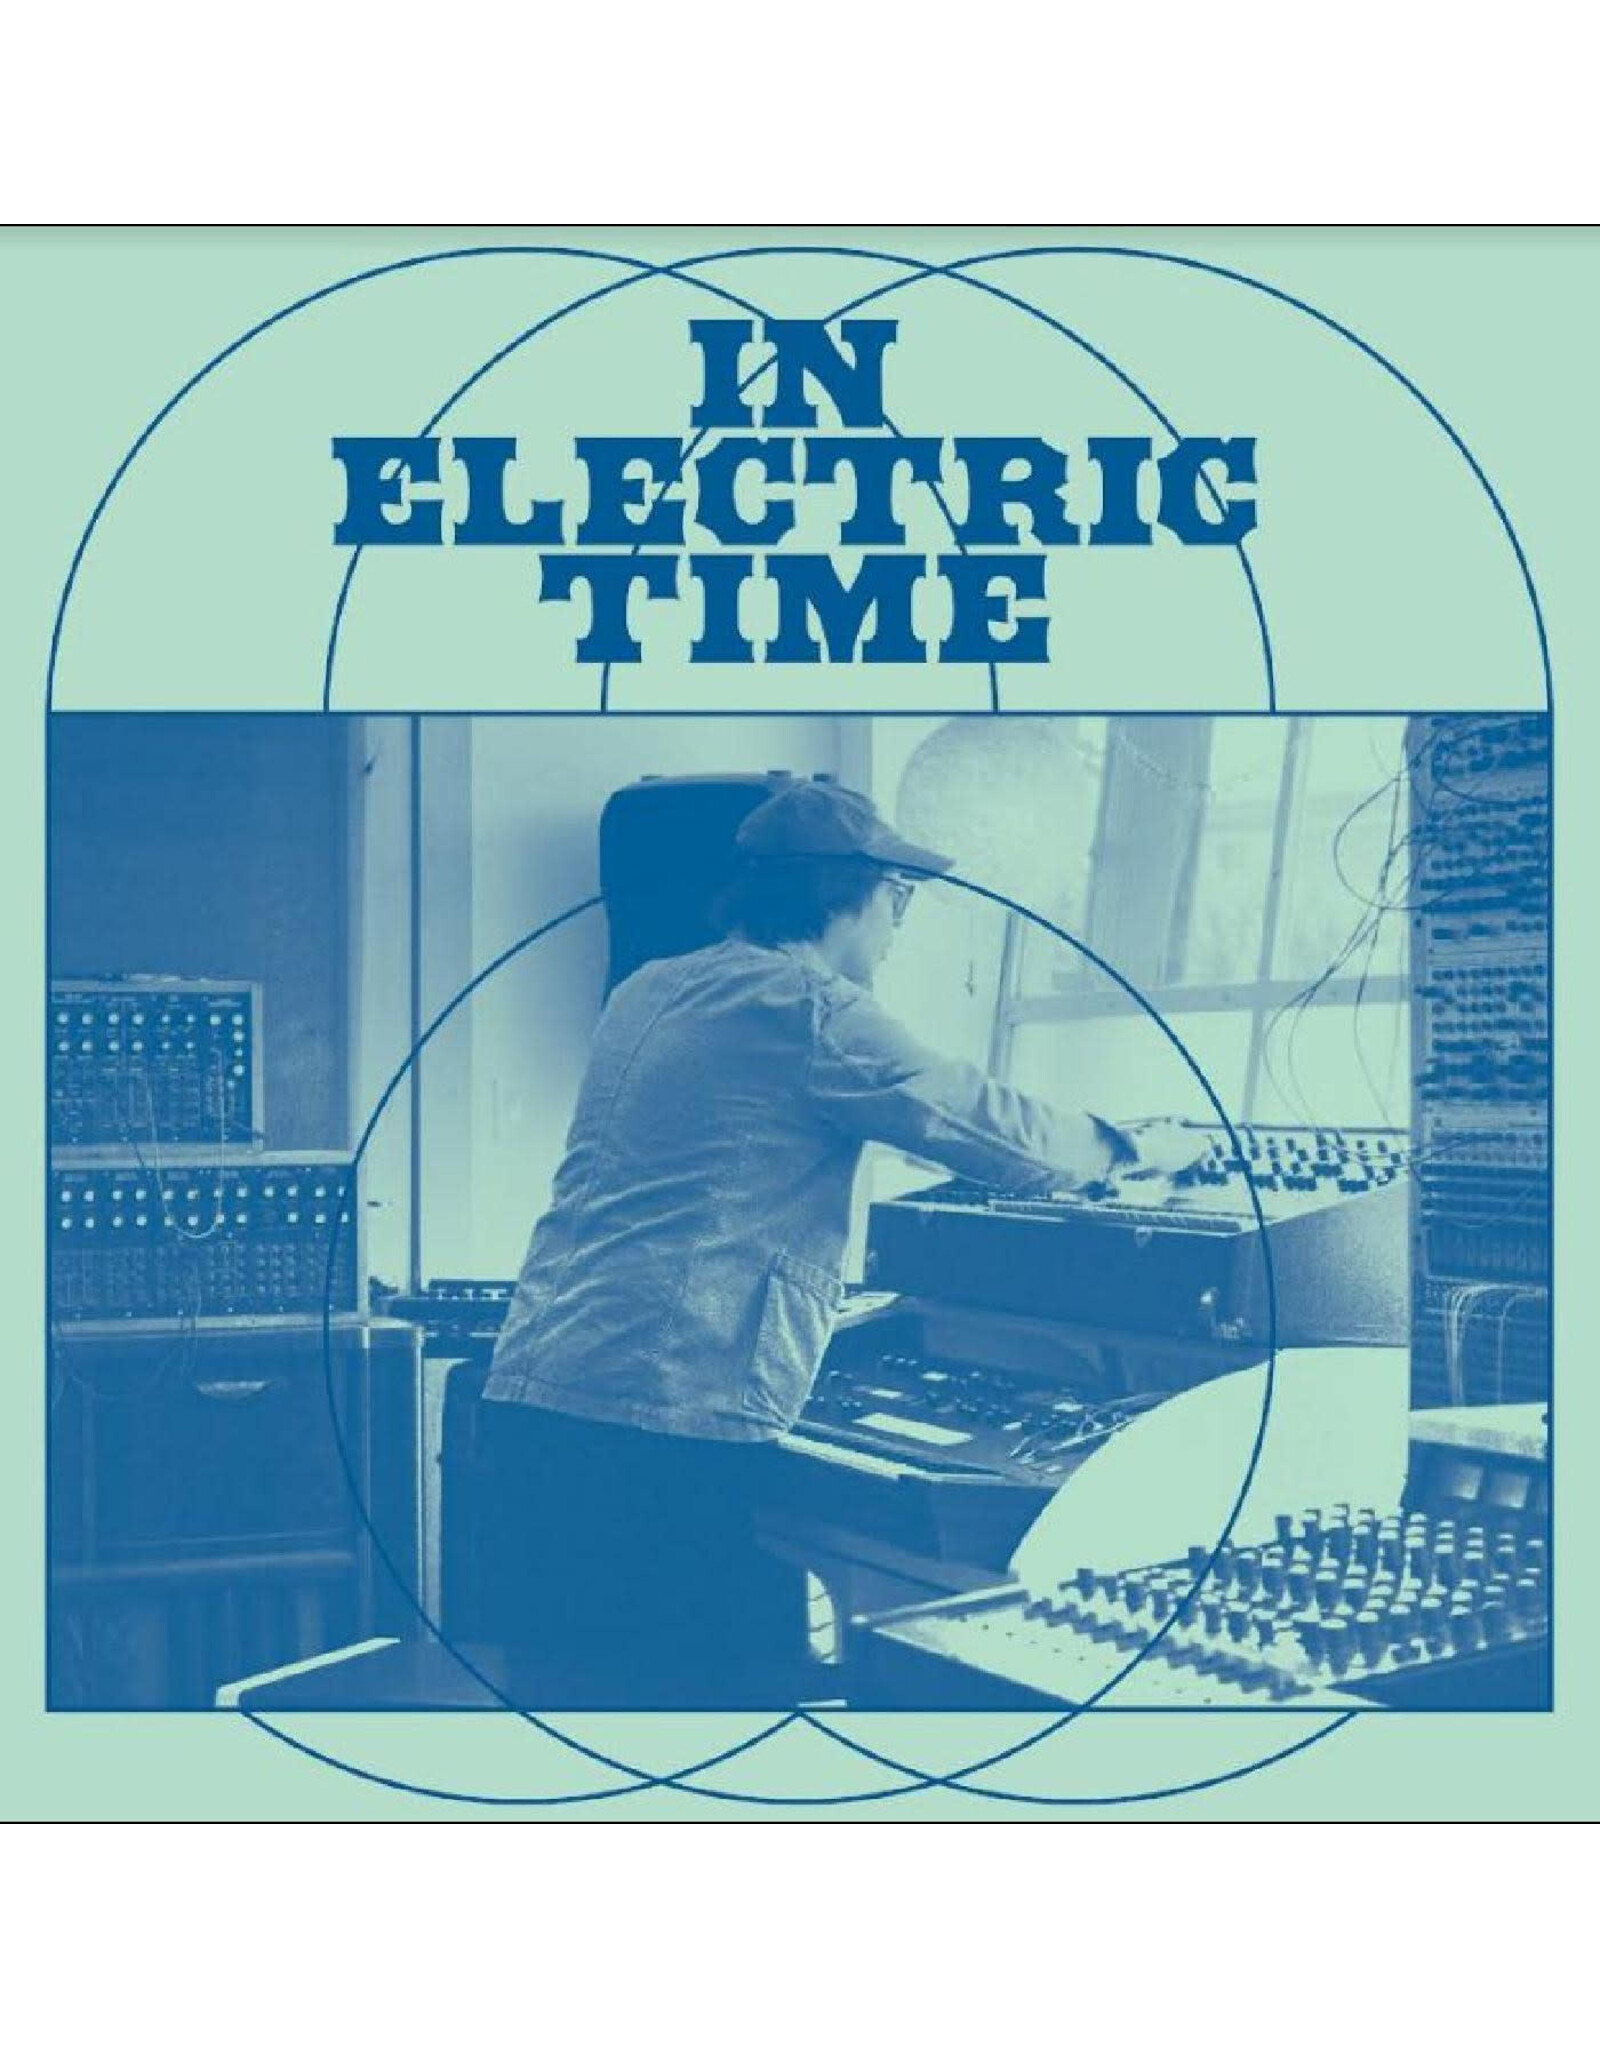 International Anthem Chiu, Jeremiah: In Electric Time LP